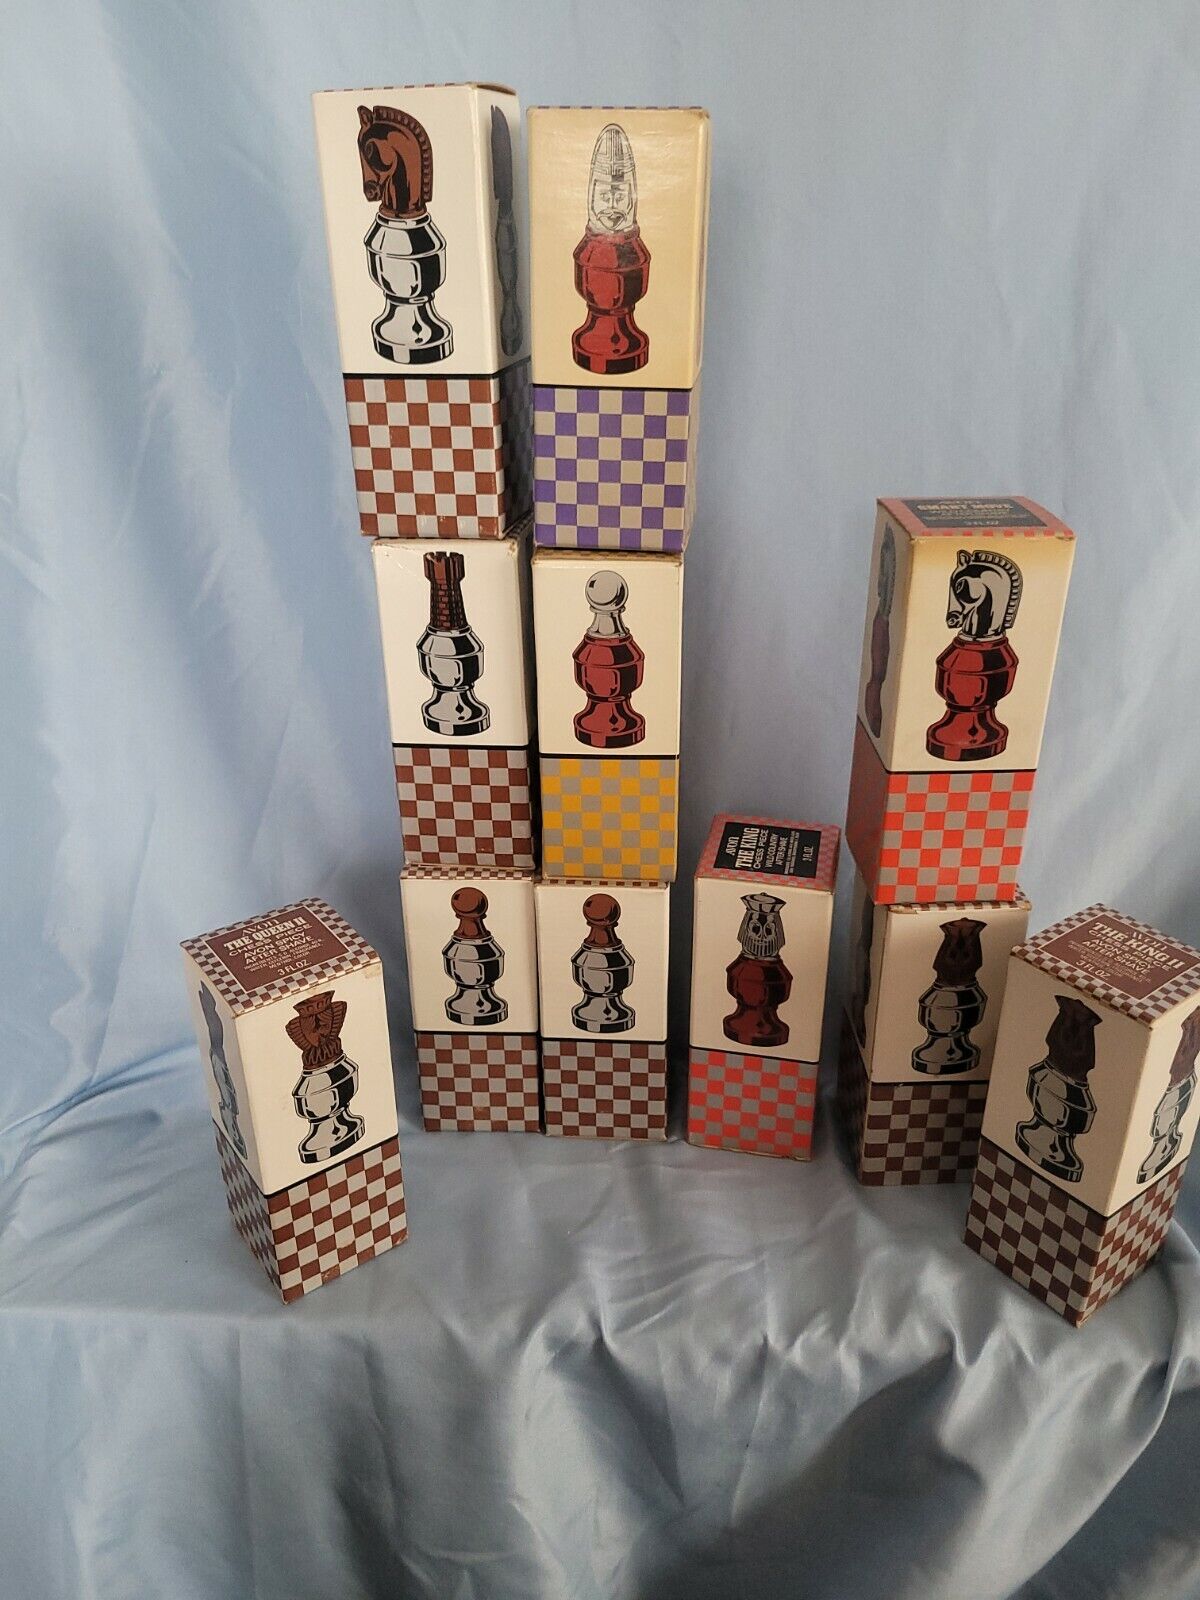 Avon Chess Pieces Avon Smart Move Aftershave Brande new original boxes 3fl oz.